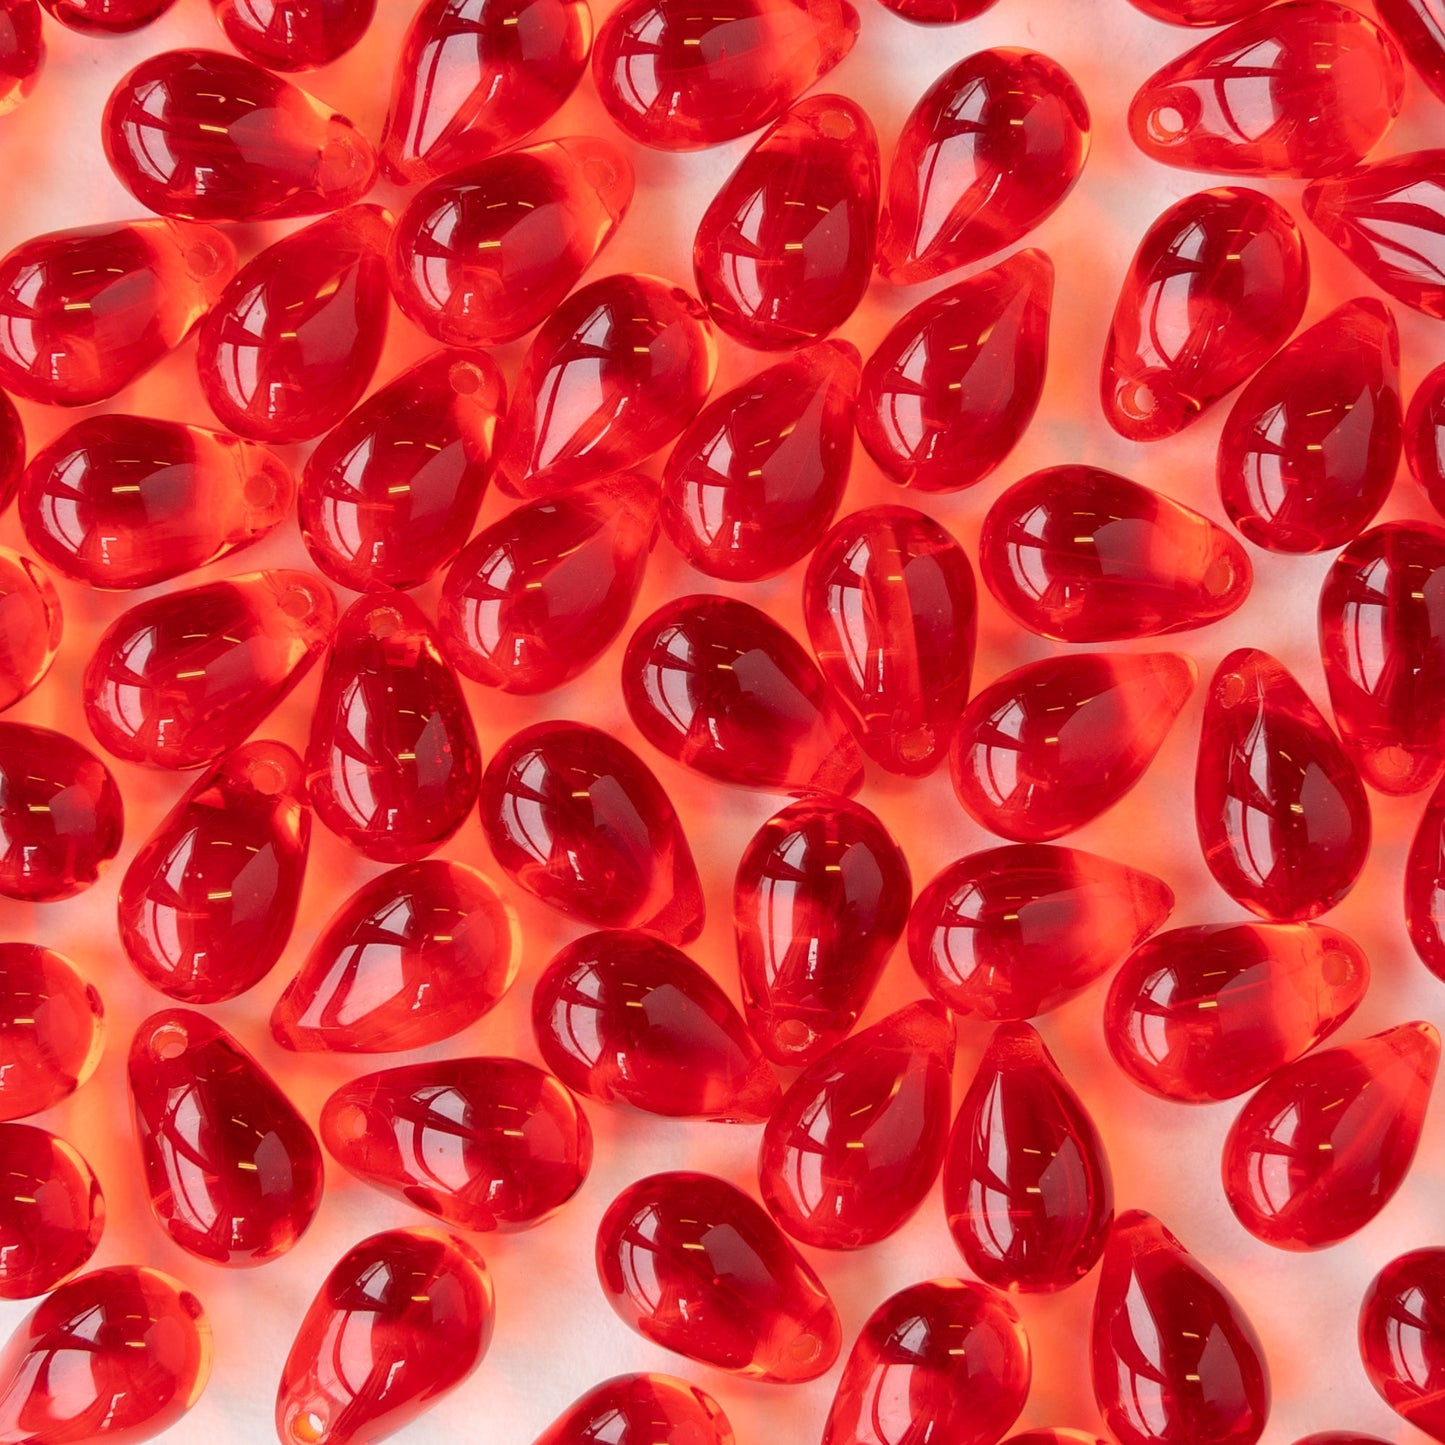 6x9mm Glass Teardrop Beads - Red - 50 Beads